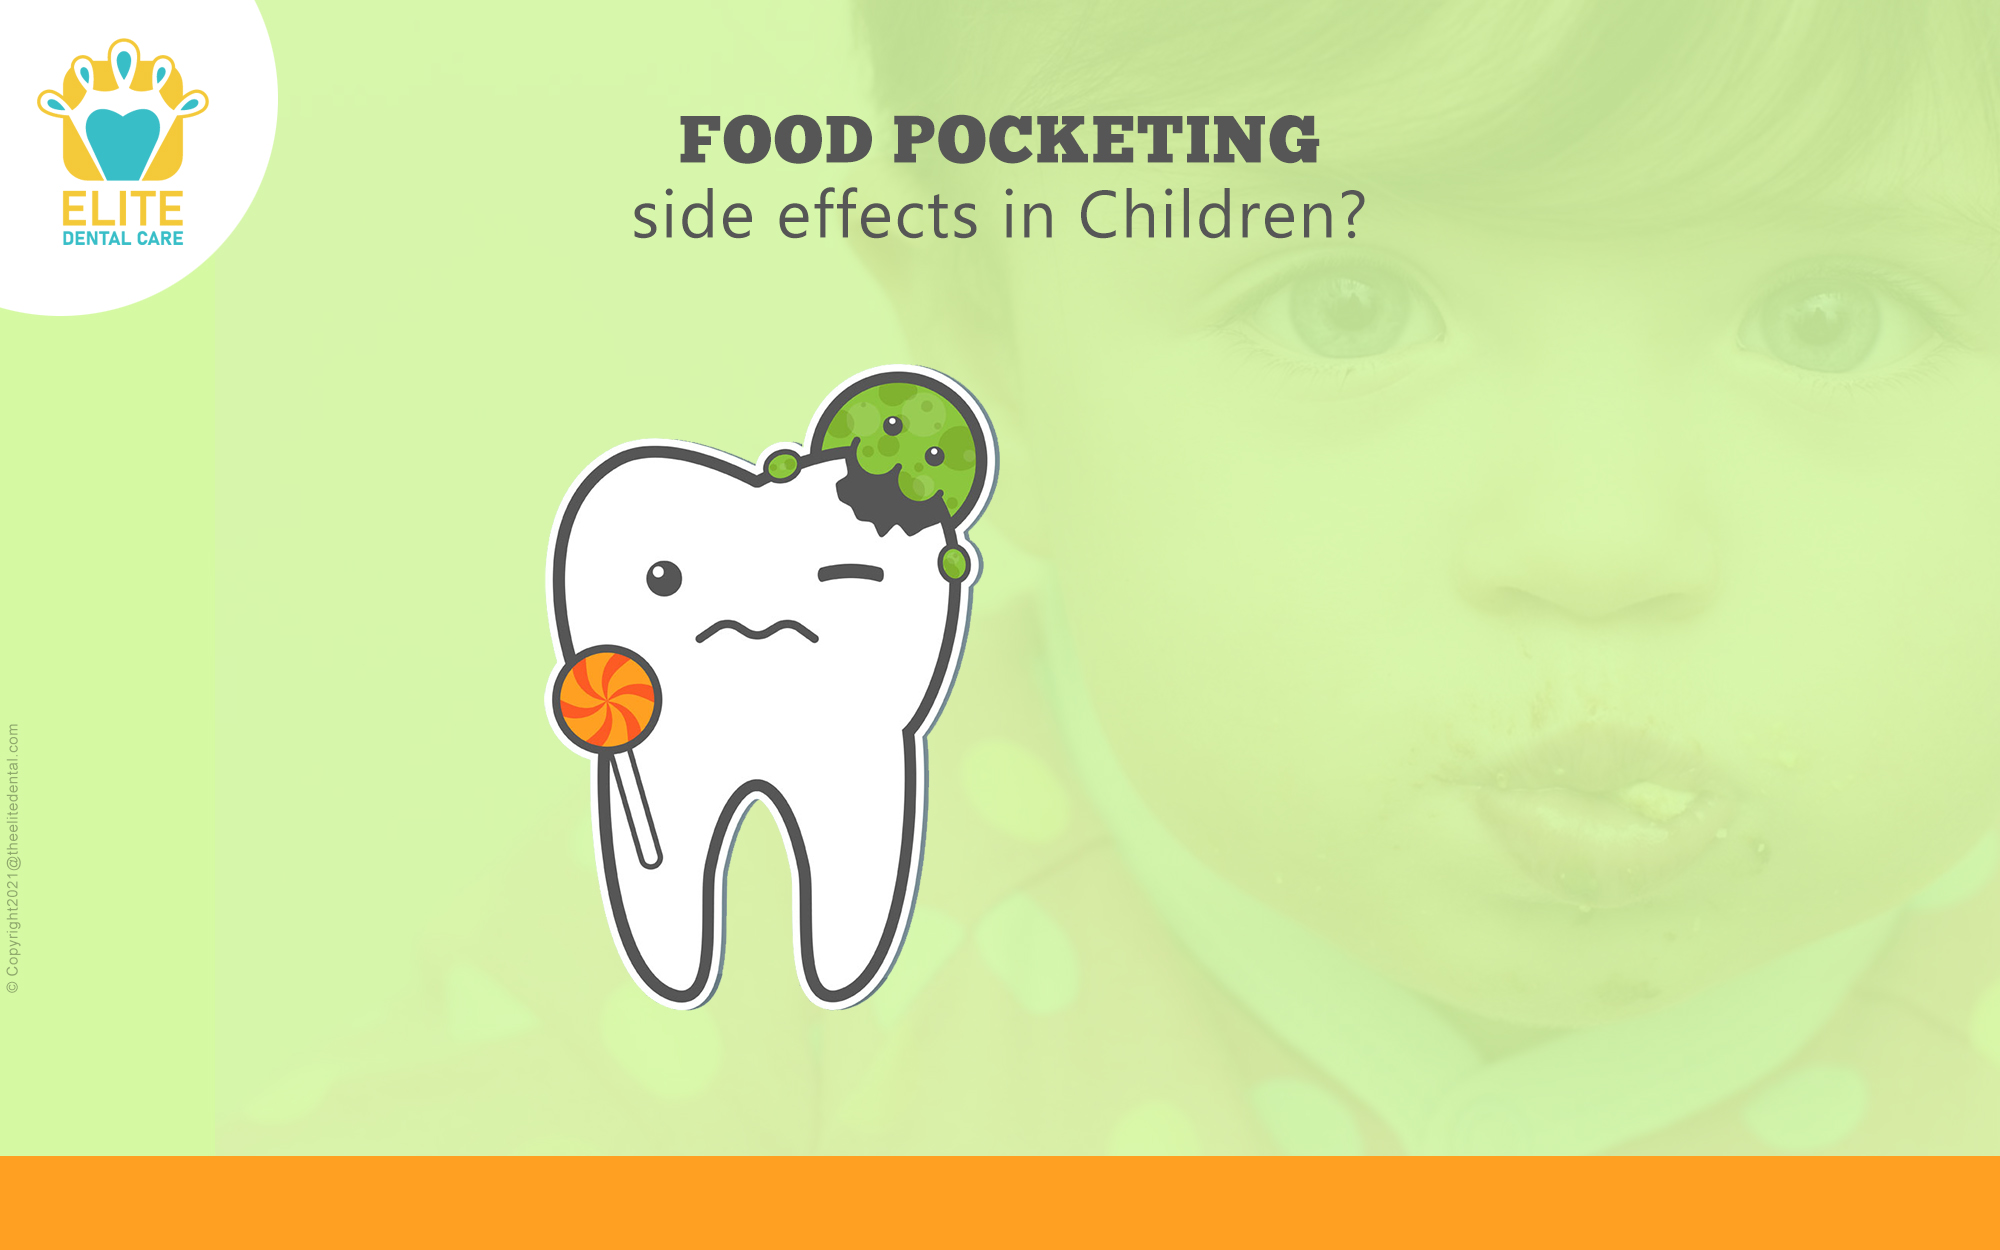 Food pocketing side effects in children